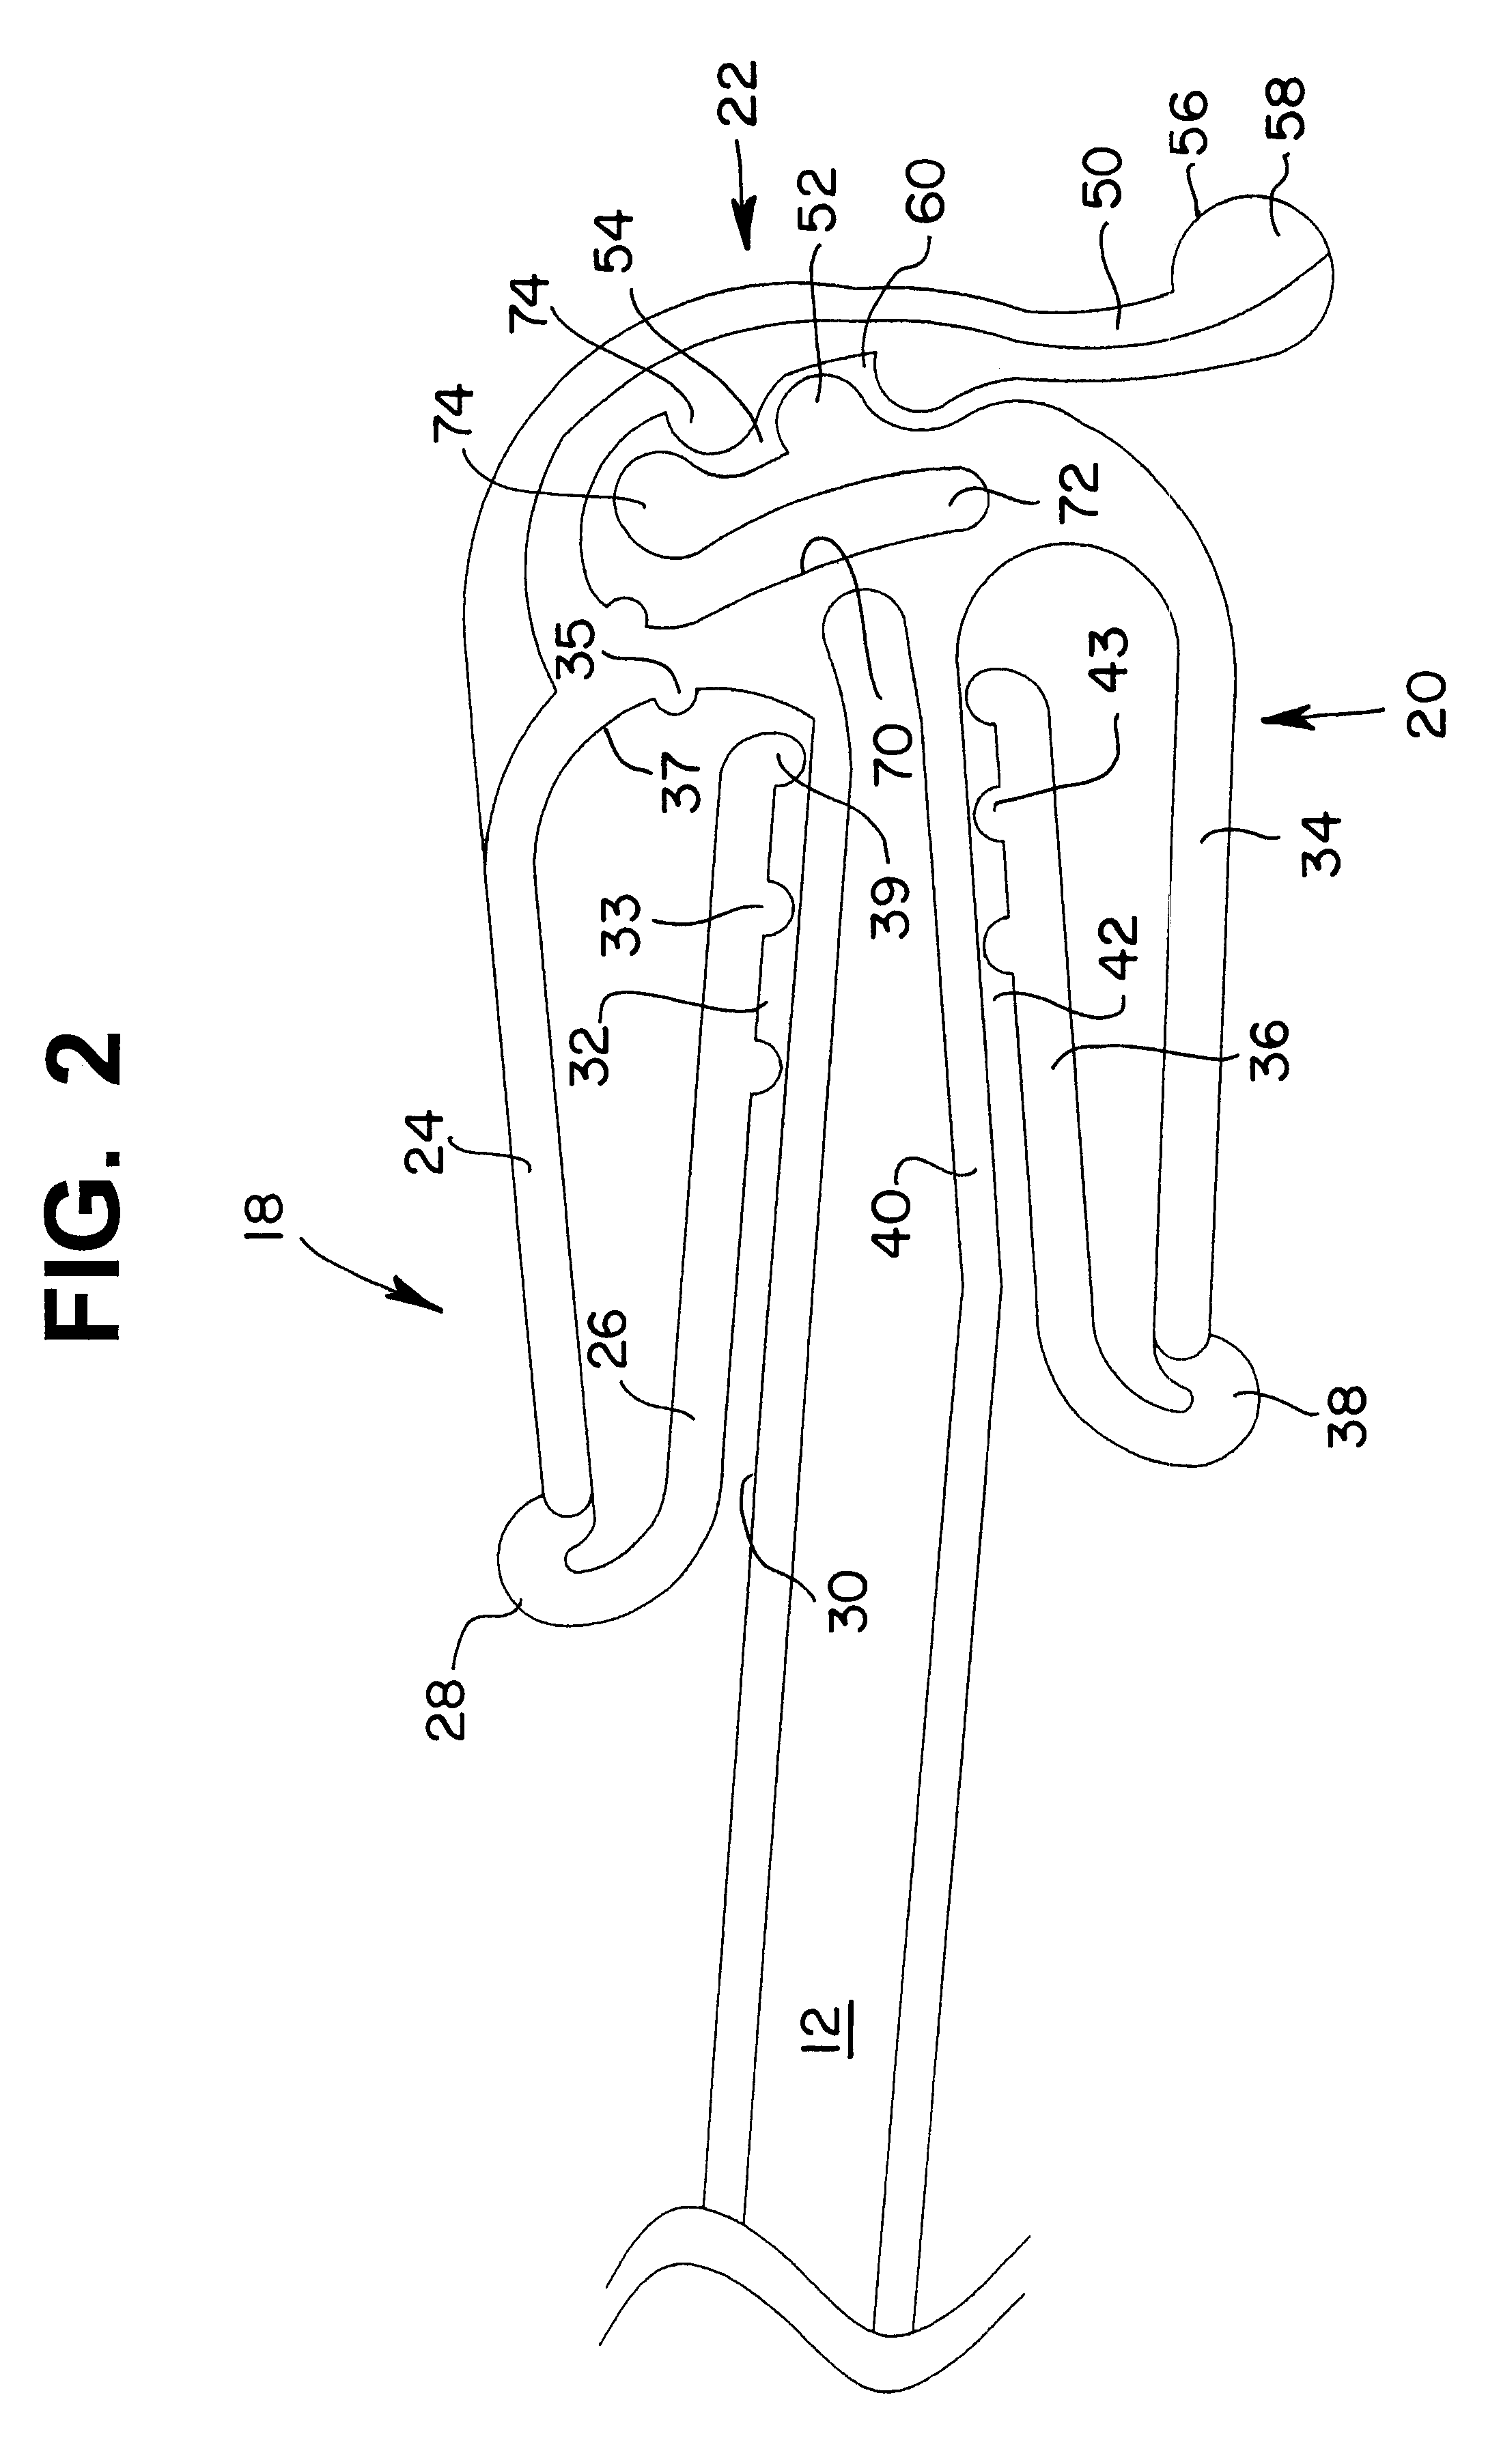 Clip arrangement for garment hangers